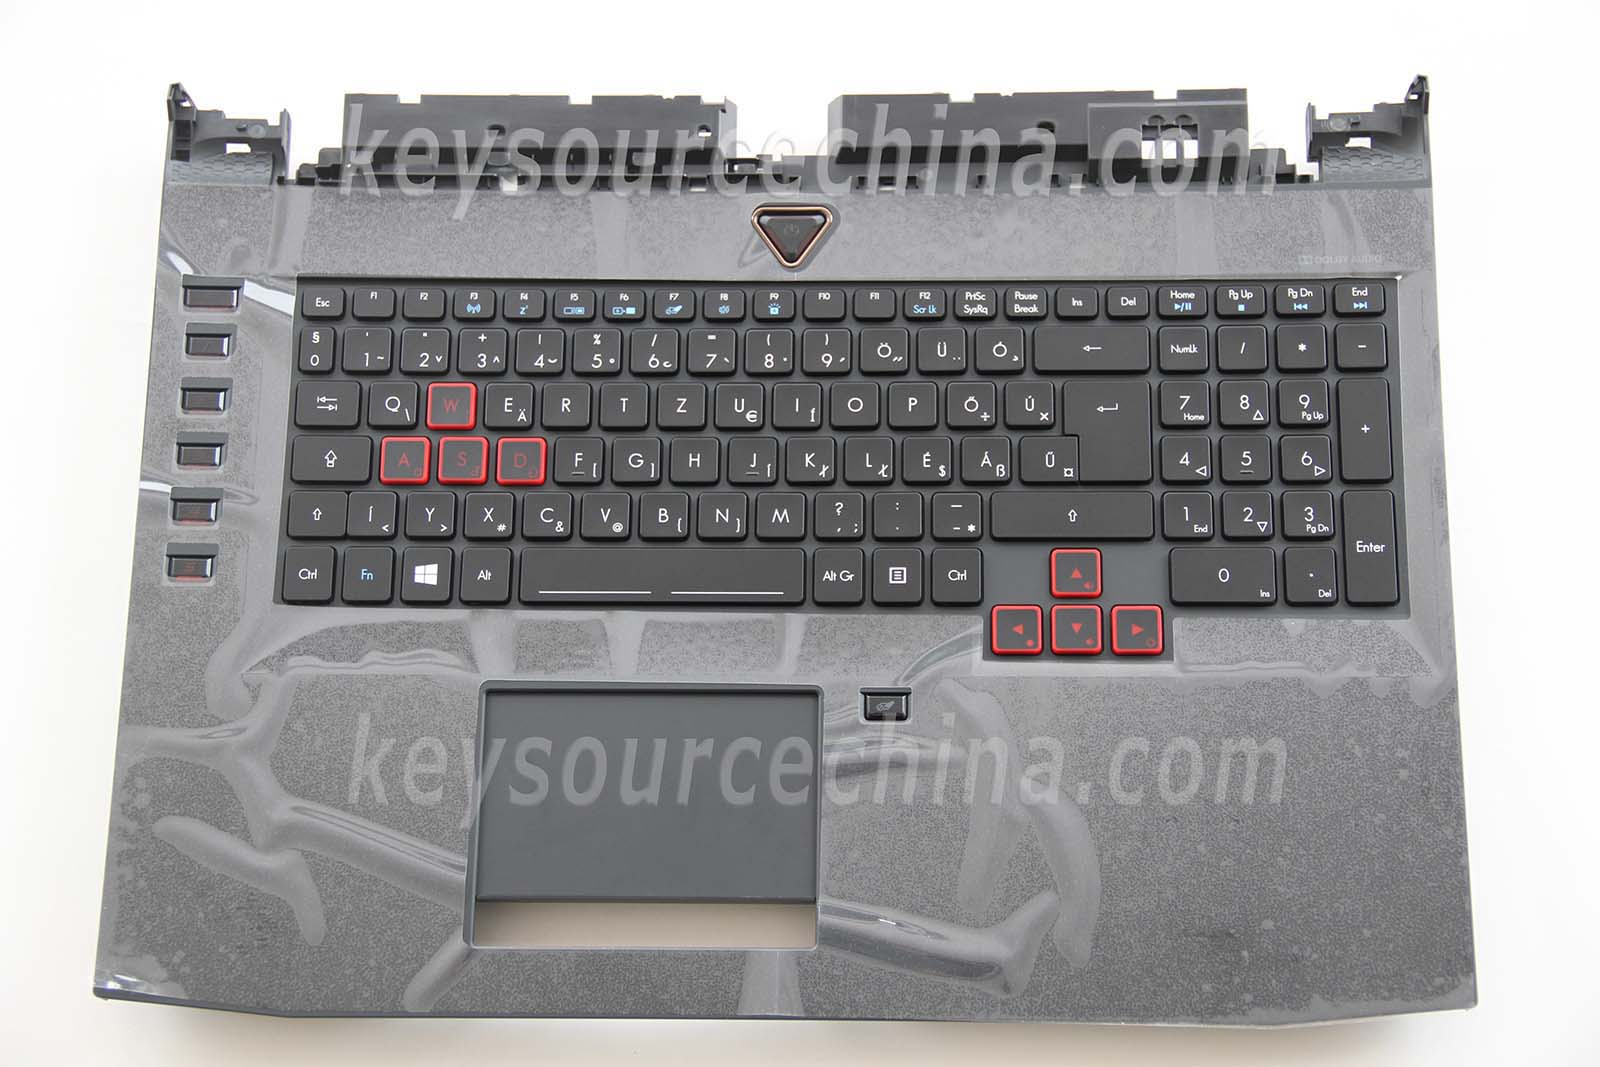 NKI151301G Magyar Billentyűzet for Acer Predator 17 G9-791 Keyboard Hungaian Backlit Top case with touch pad